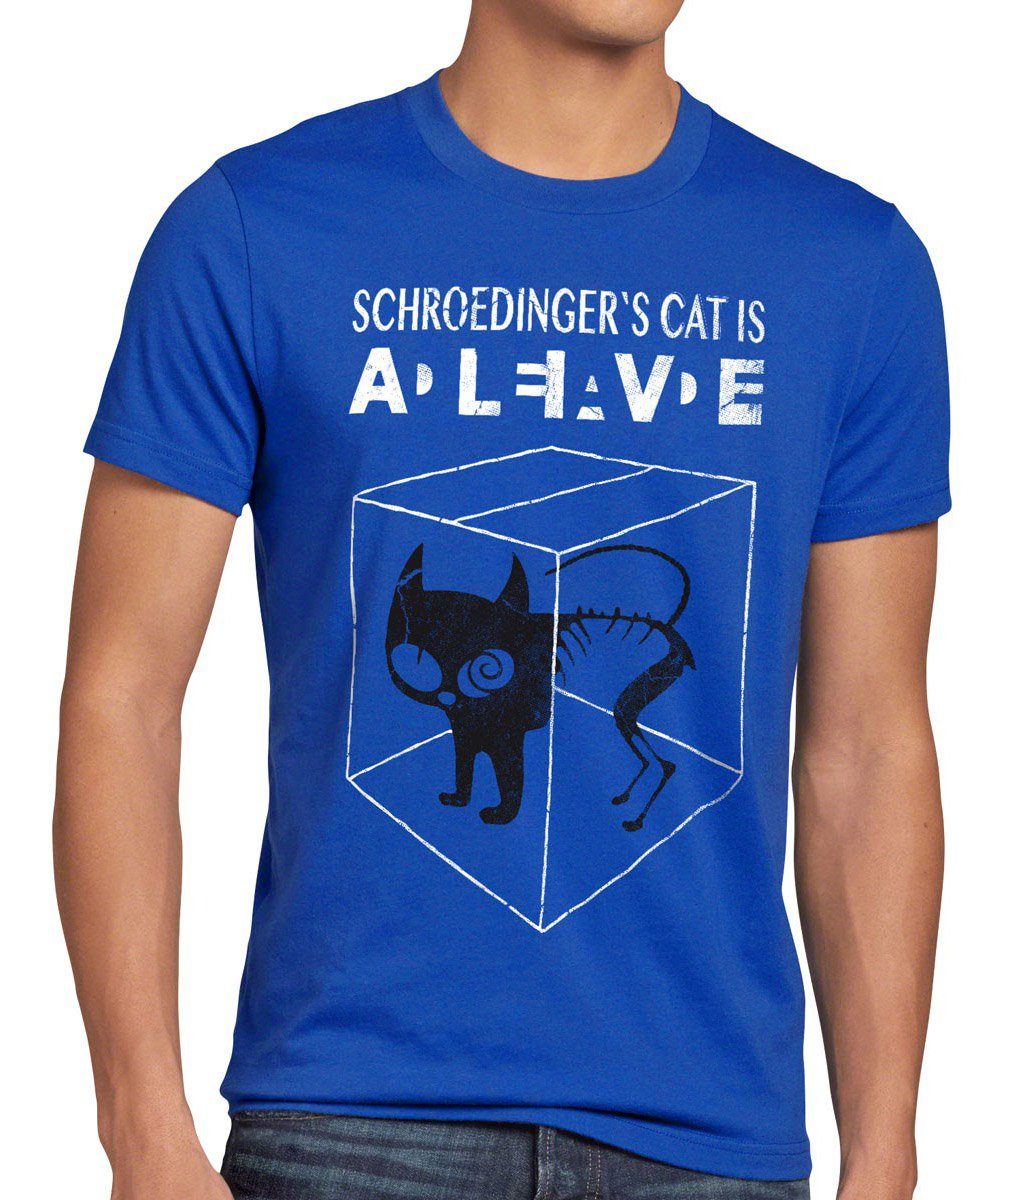 style3 Print-Shirt Herren T-Shirt Schroedinger's Katze Big Bang Sheldon schrödingers Theory cat neu blau